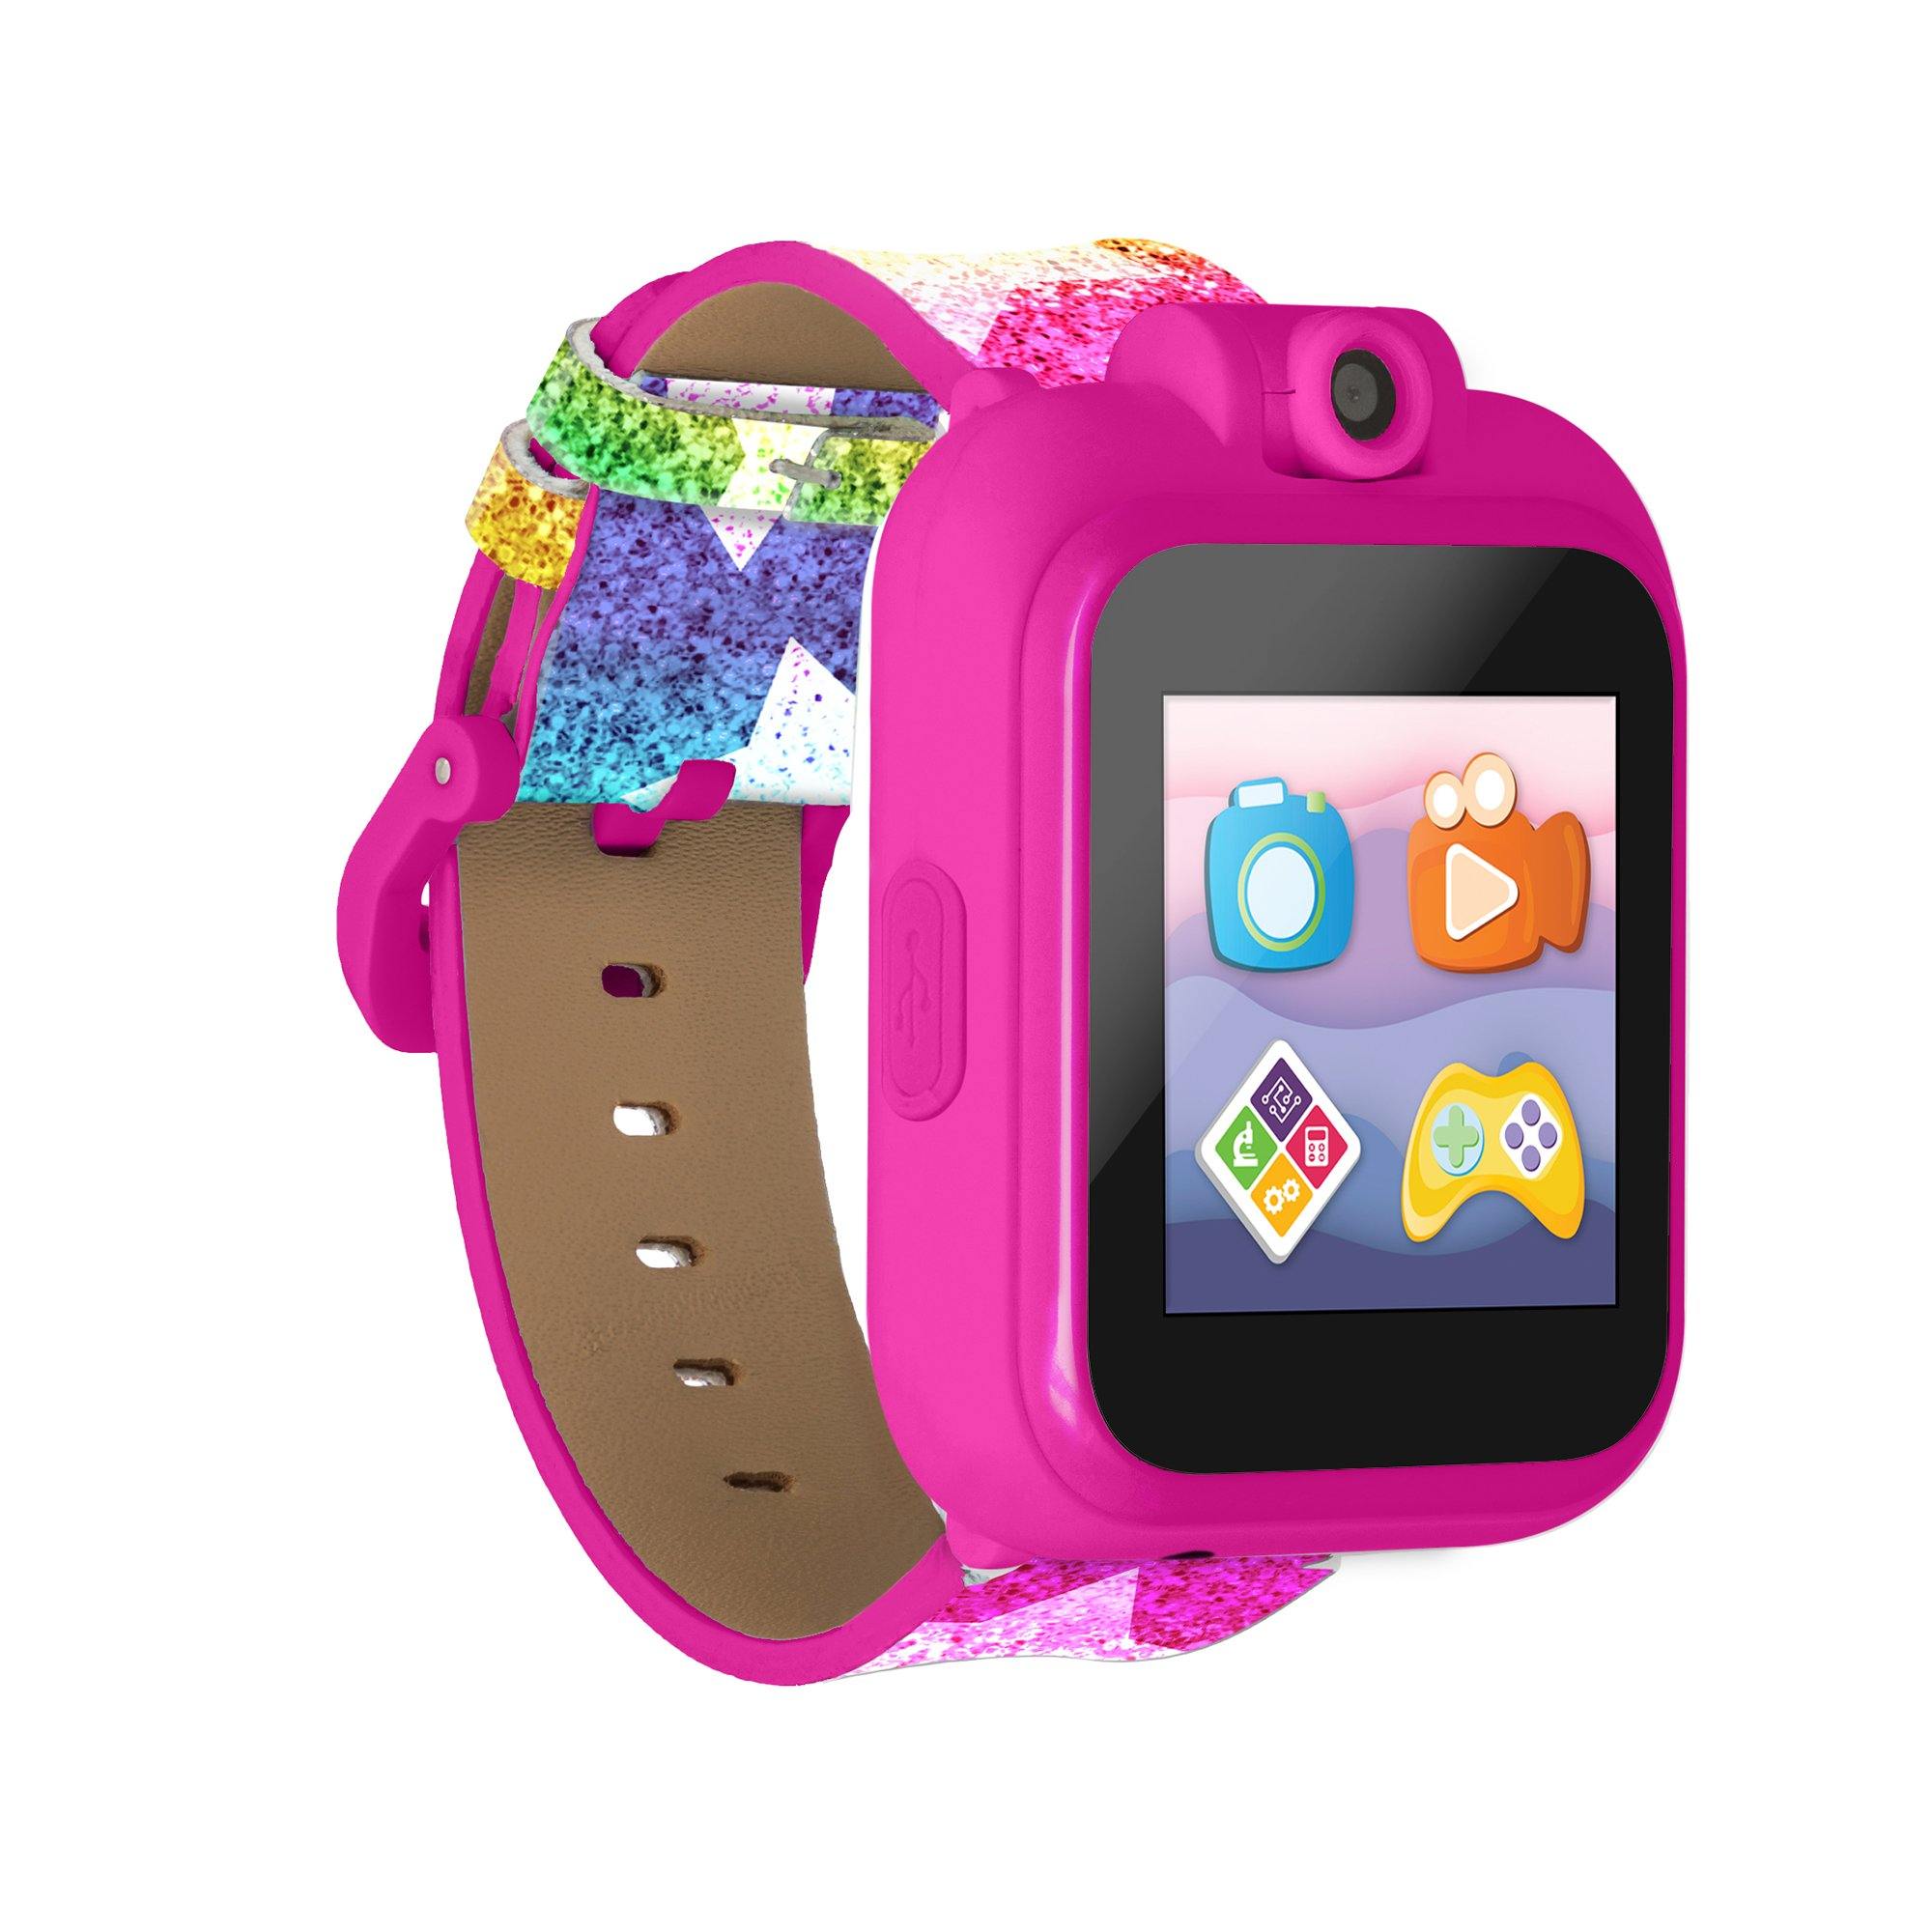 PlayZoom 2 Kids Smartwatch: Rainbow Star Print affordable smart watch